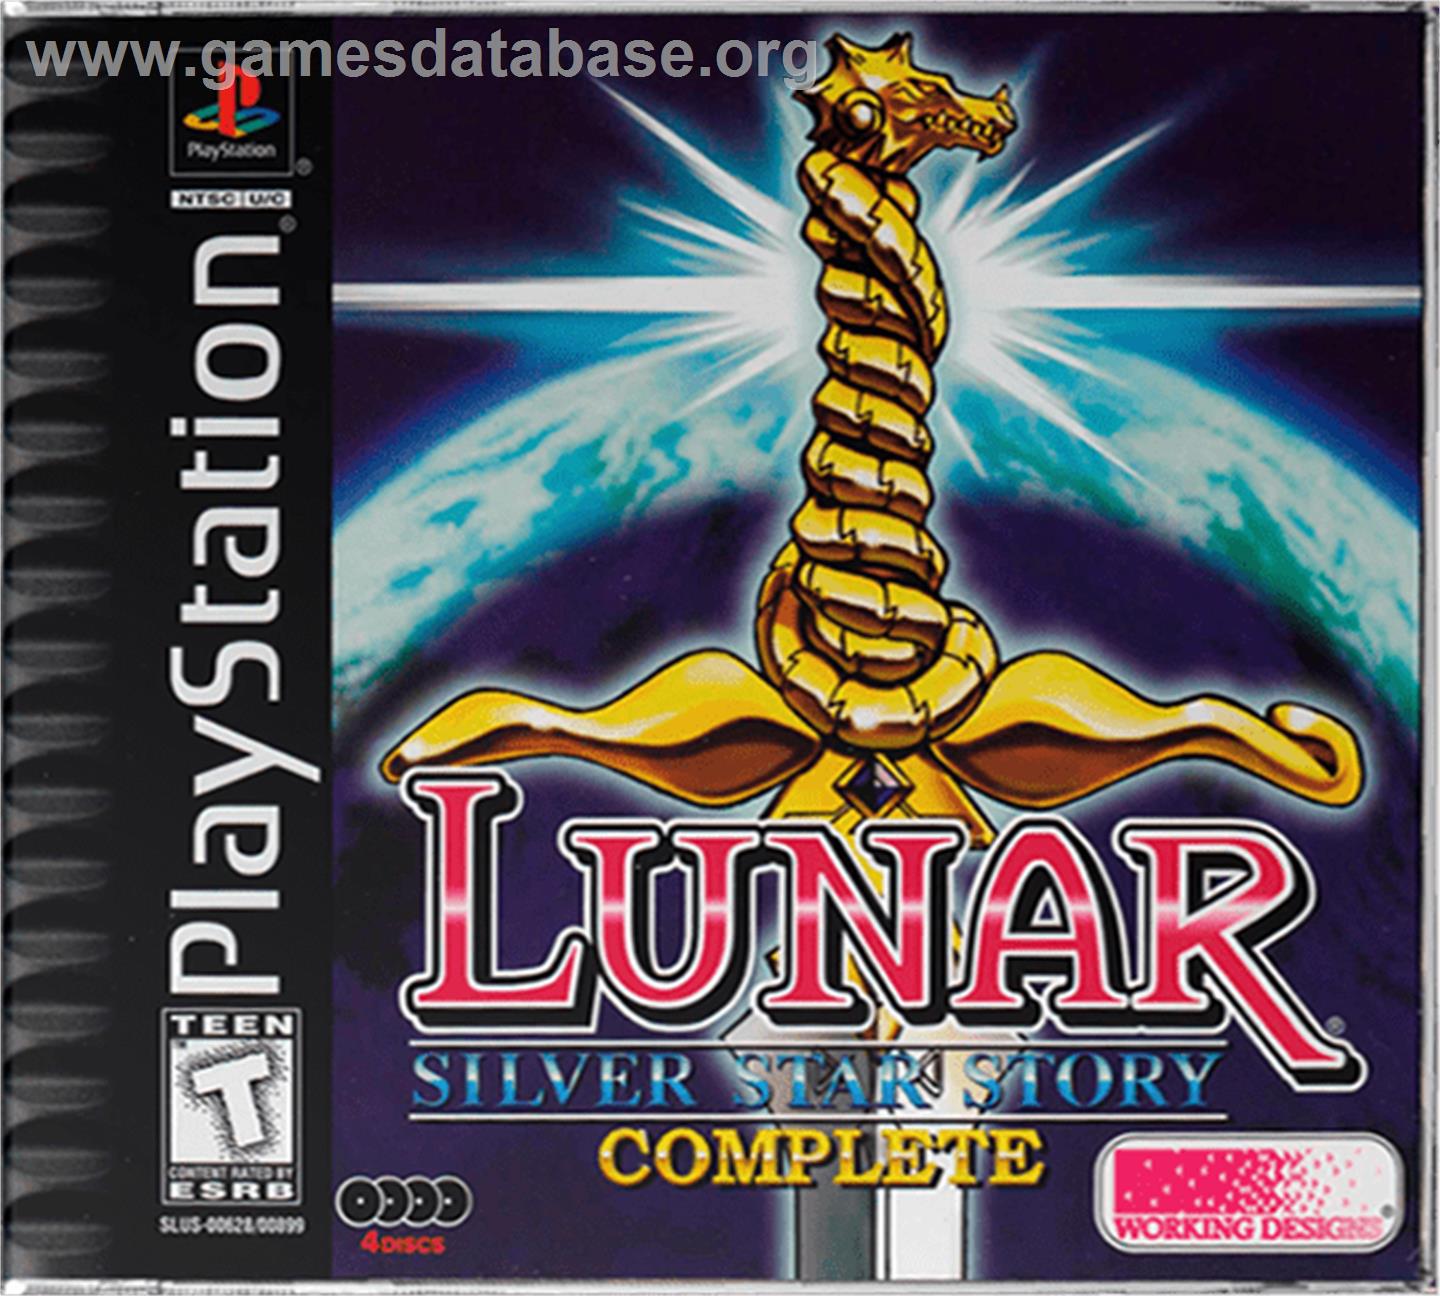 Lunar: Silver Star Story Complete - Sony Playstation - Artwork - Box